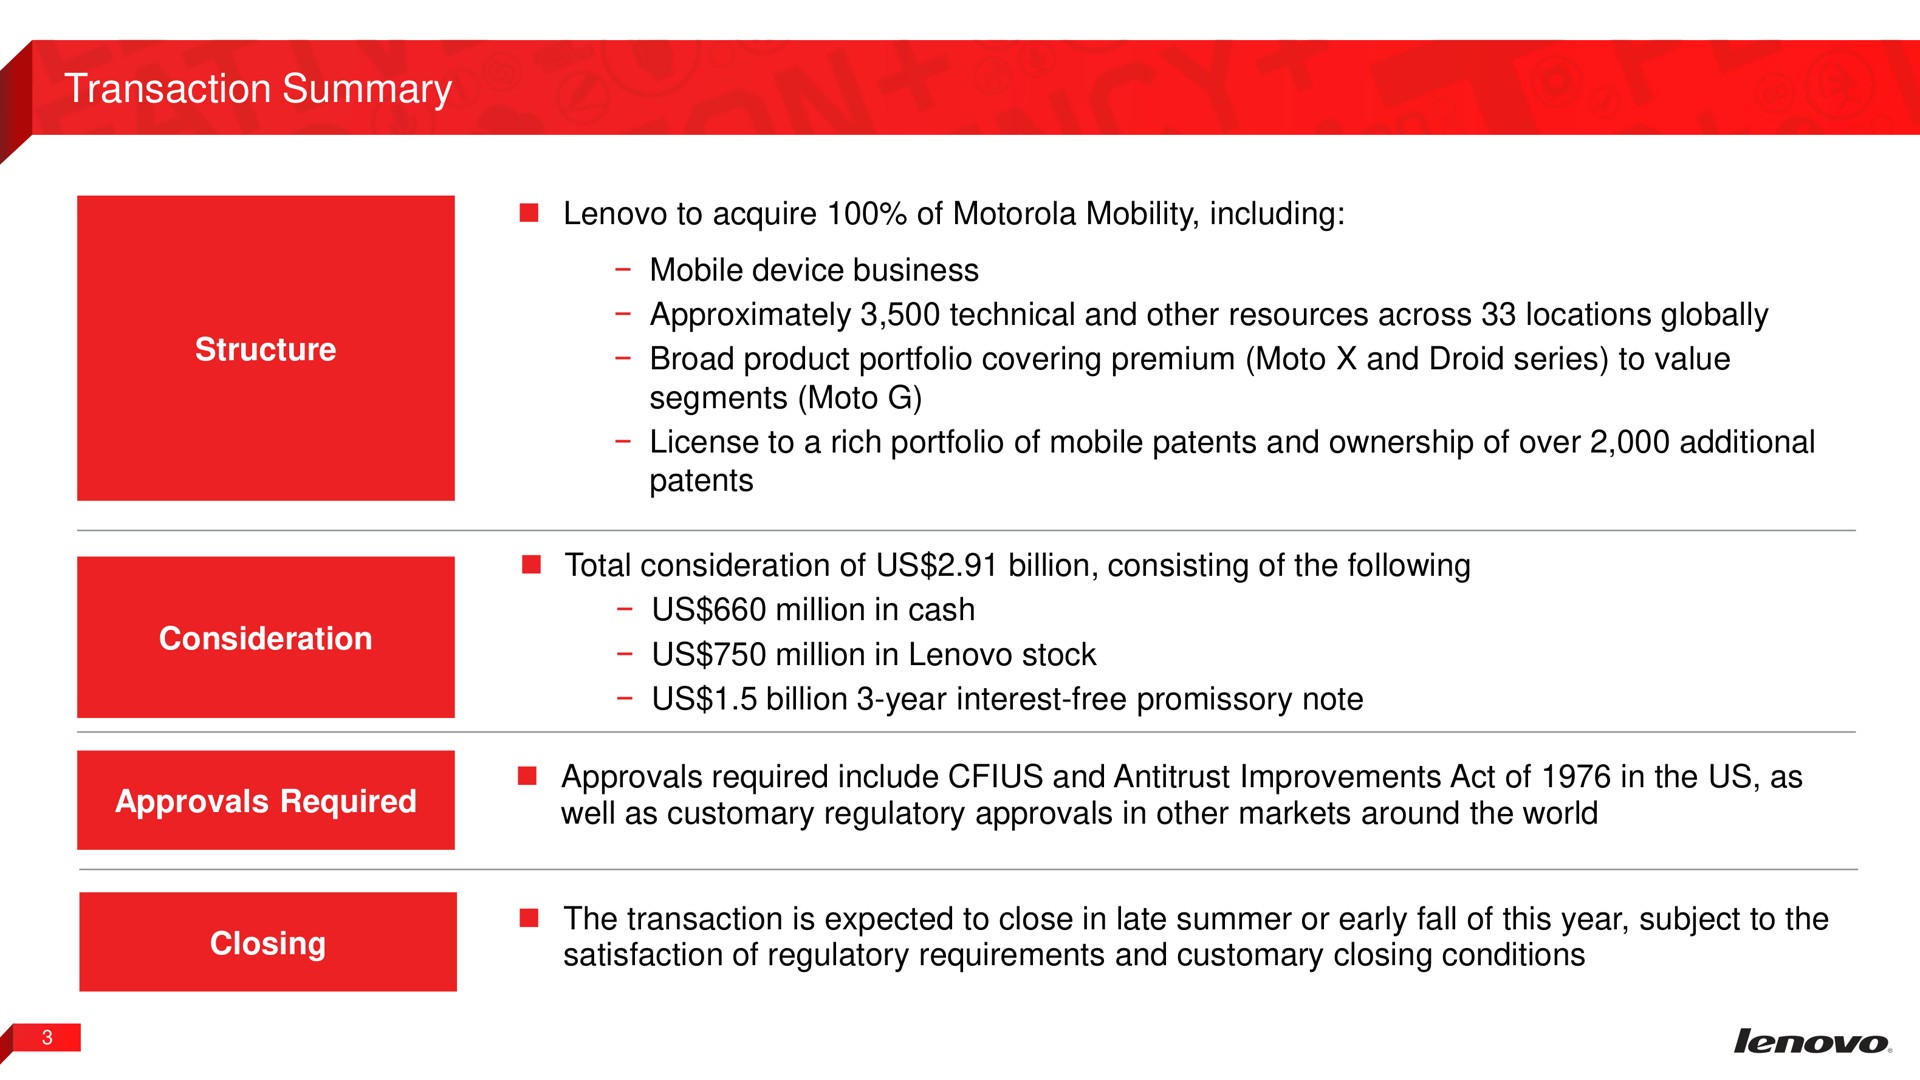 transaction summary see us million in stock | Lenovo